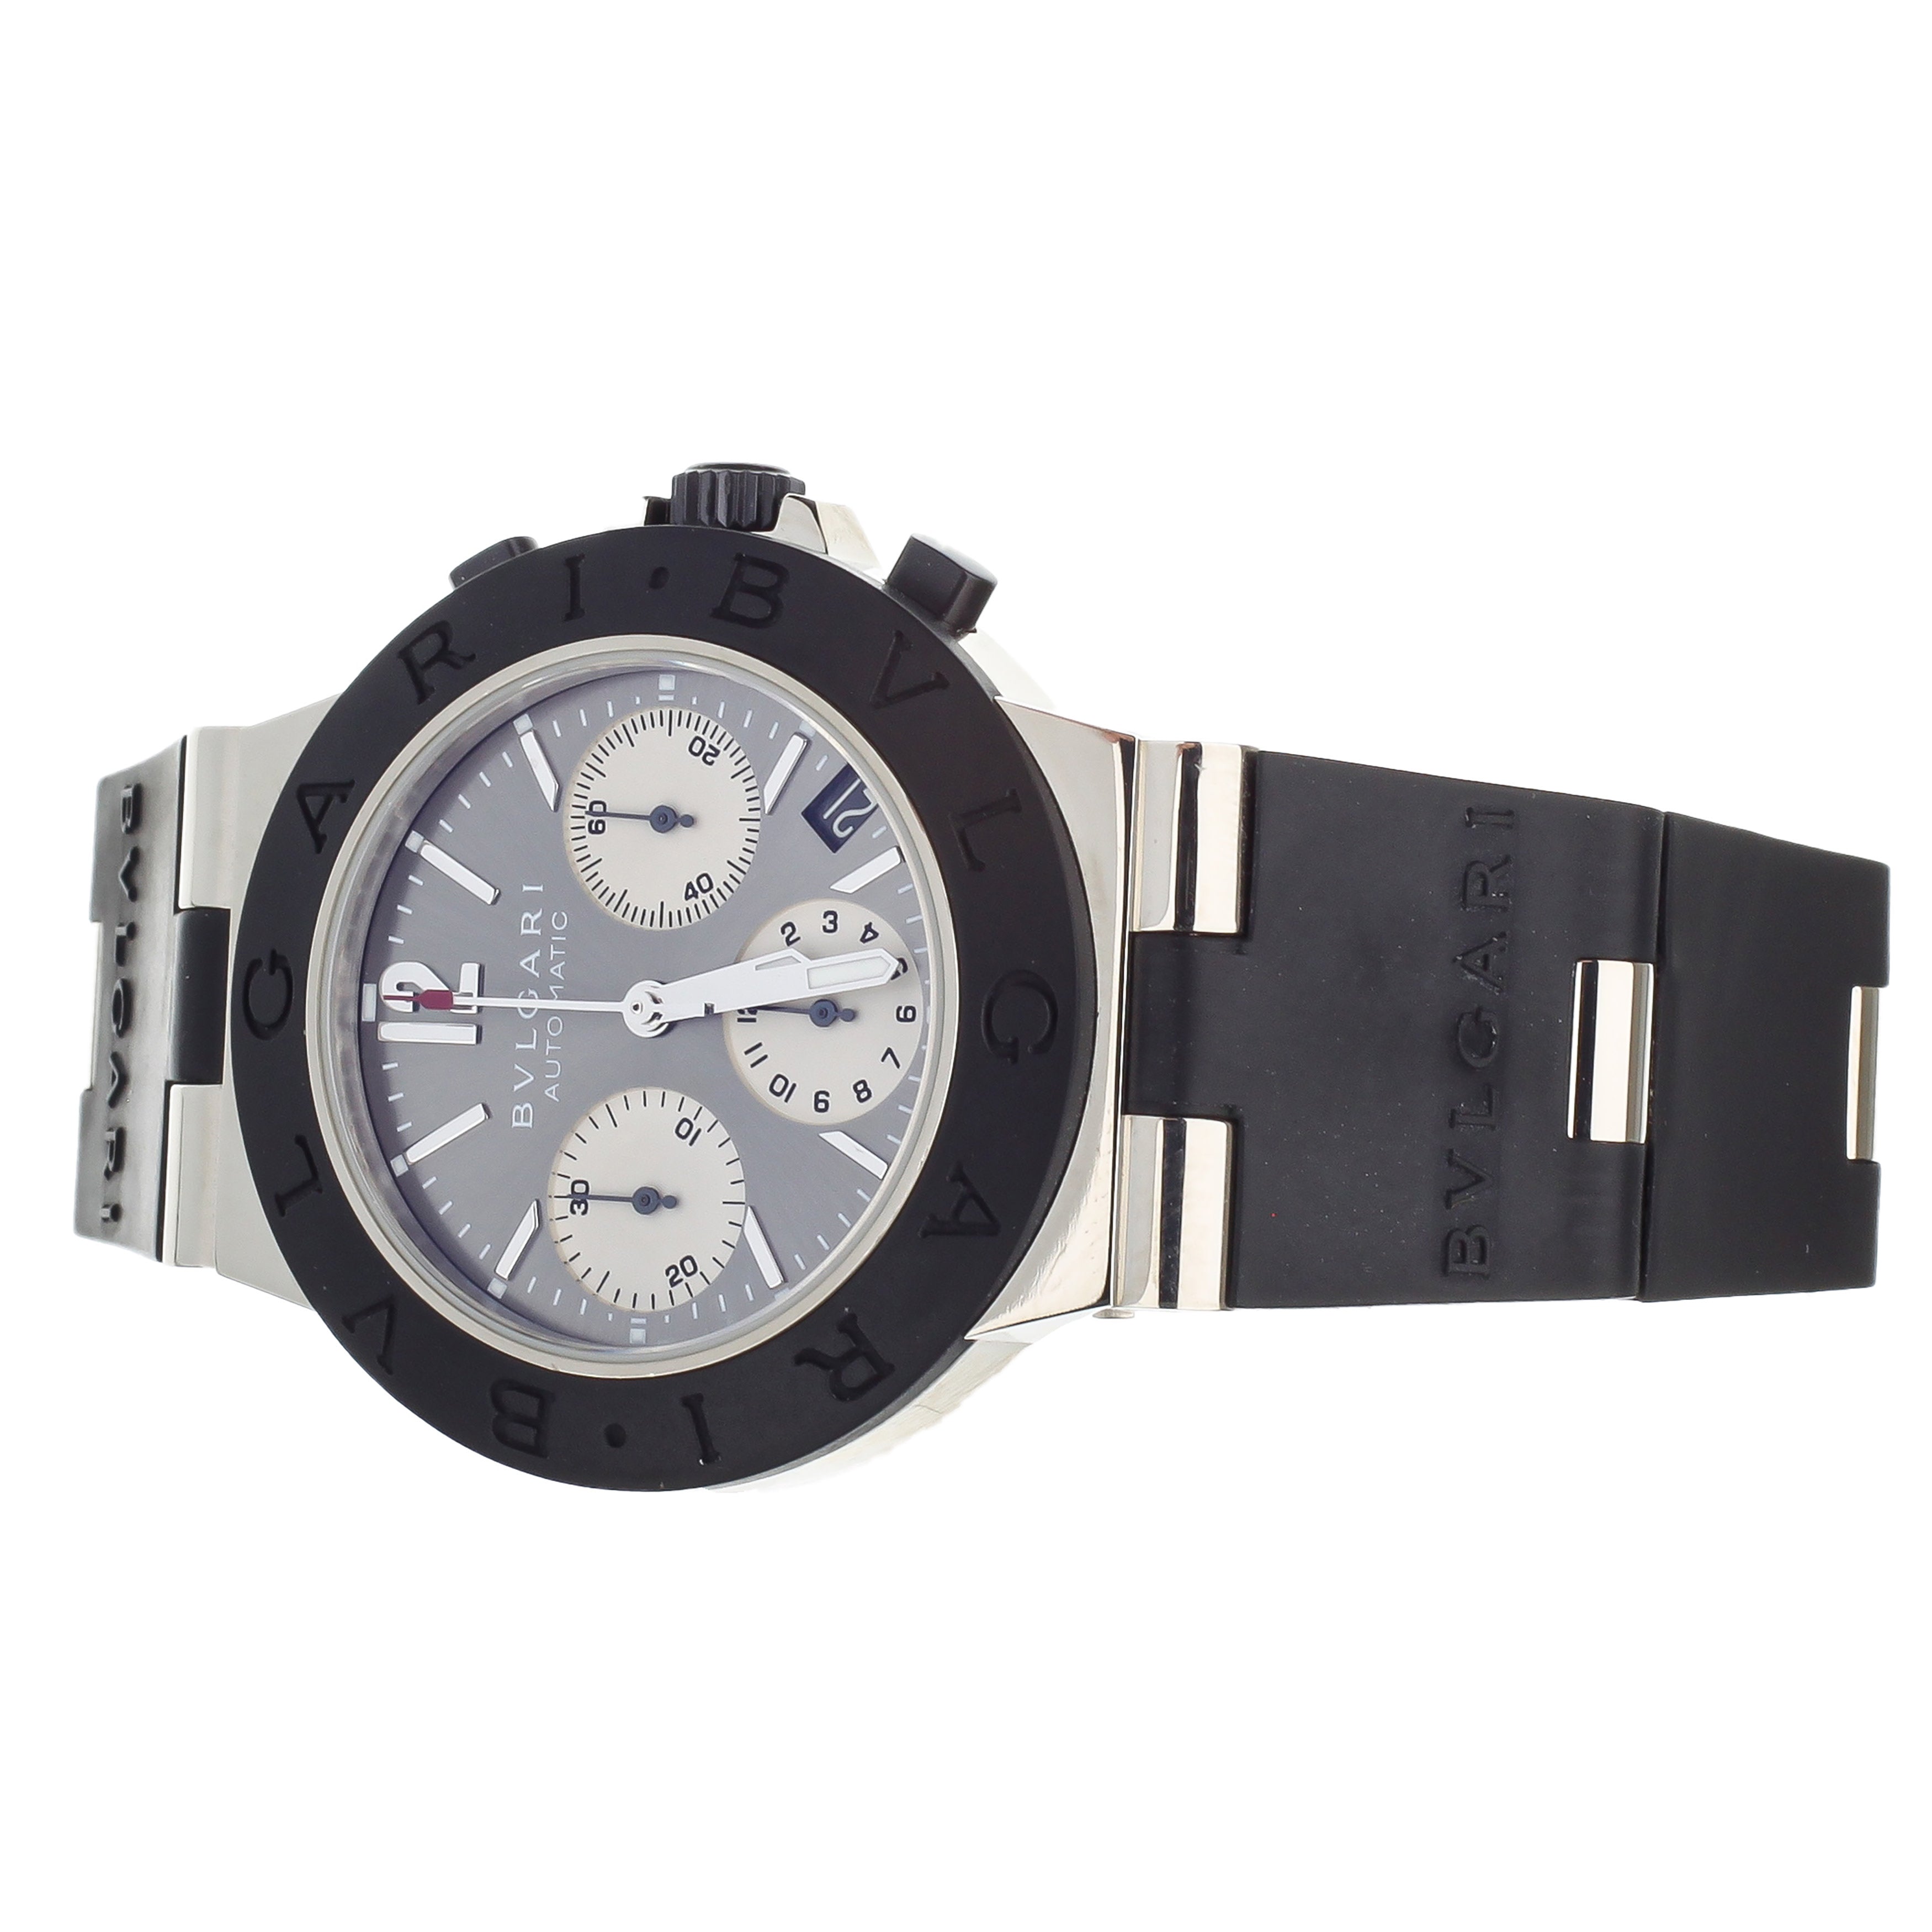 Bvlgari Men's Diagono Chronograph Automatic Watch